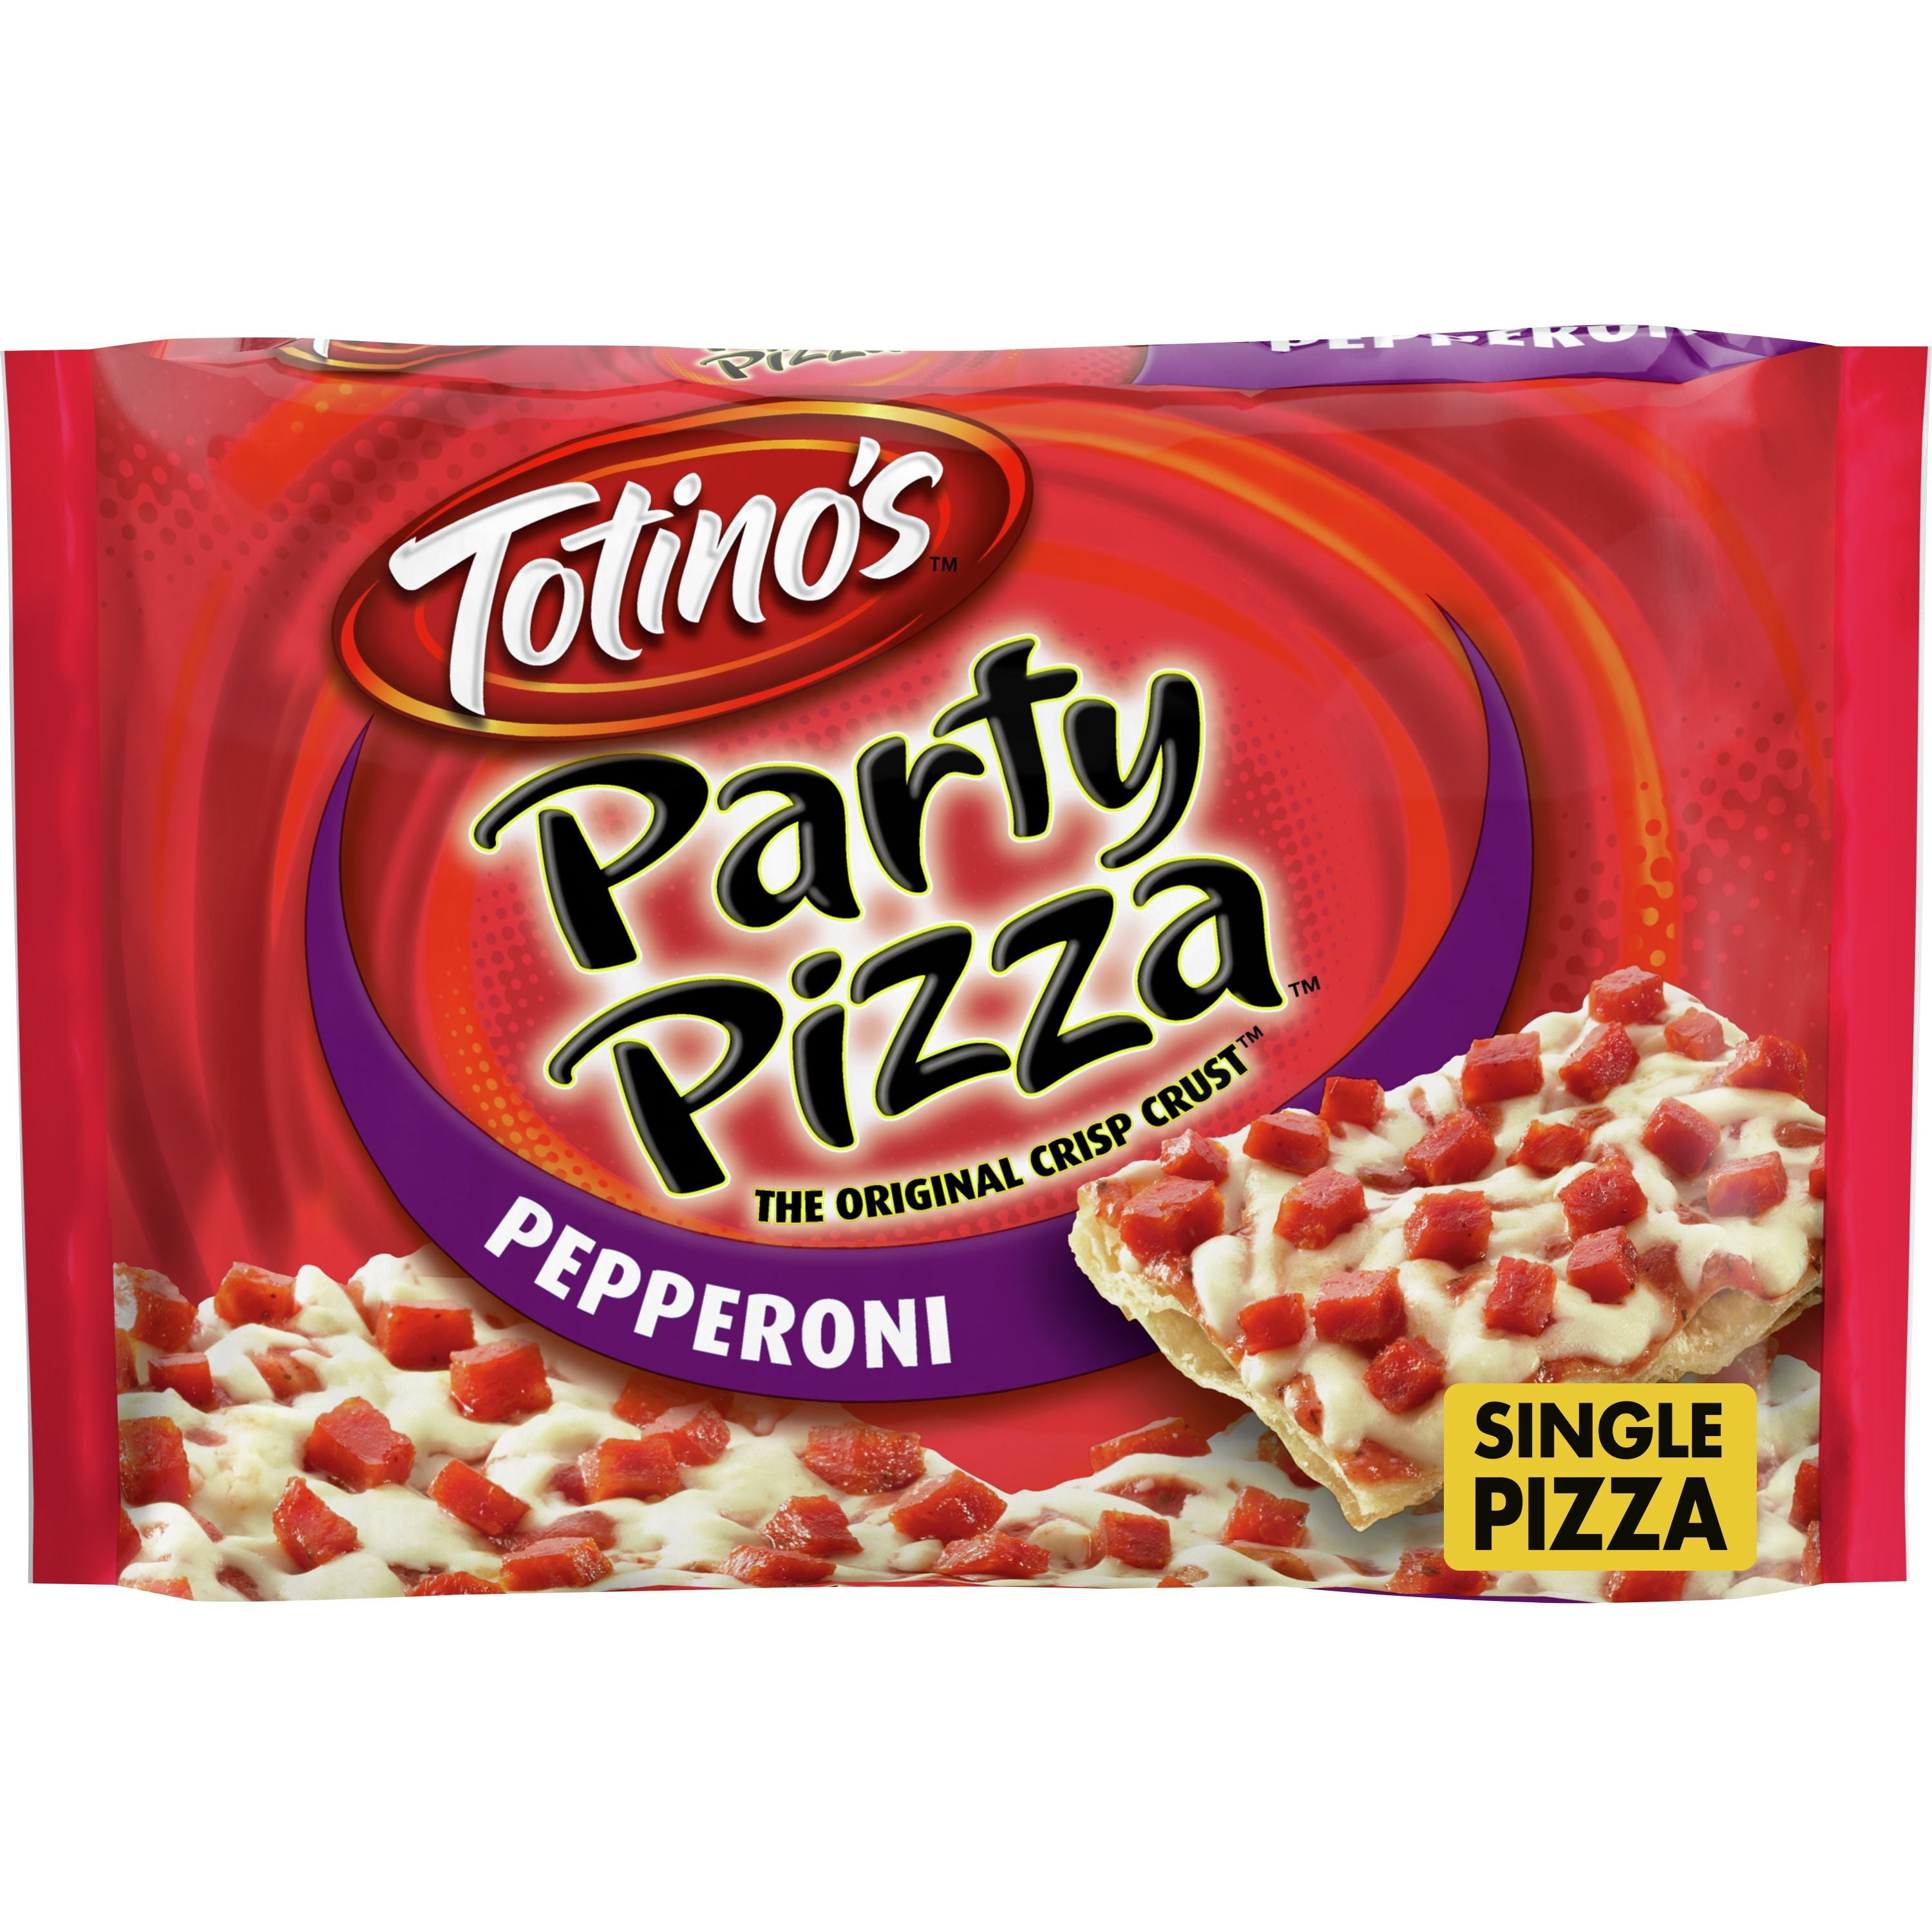 Totinos Original Crisp Crust Pepperoni Frozen Pizza 10.2oz